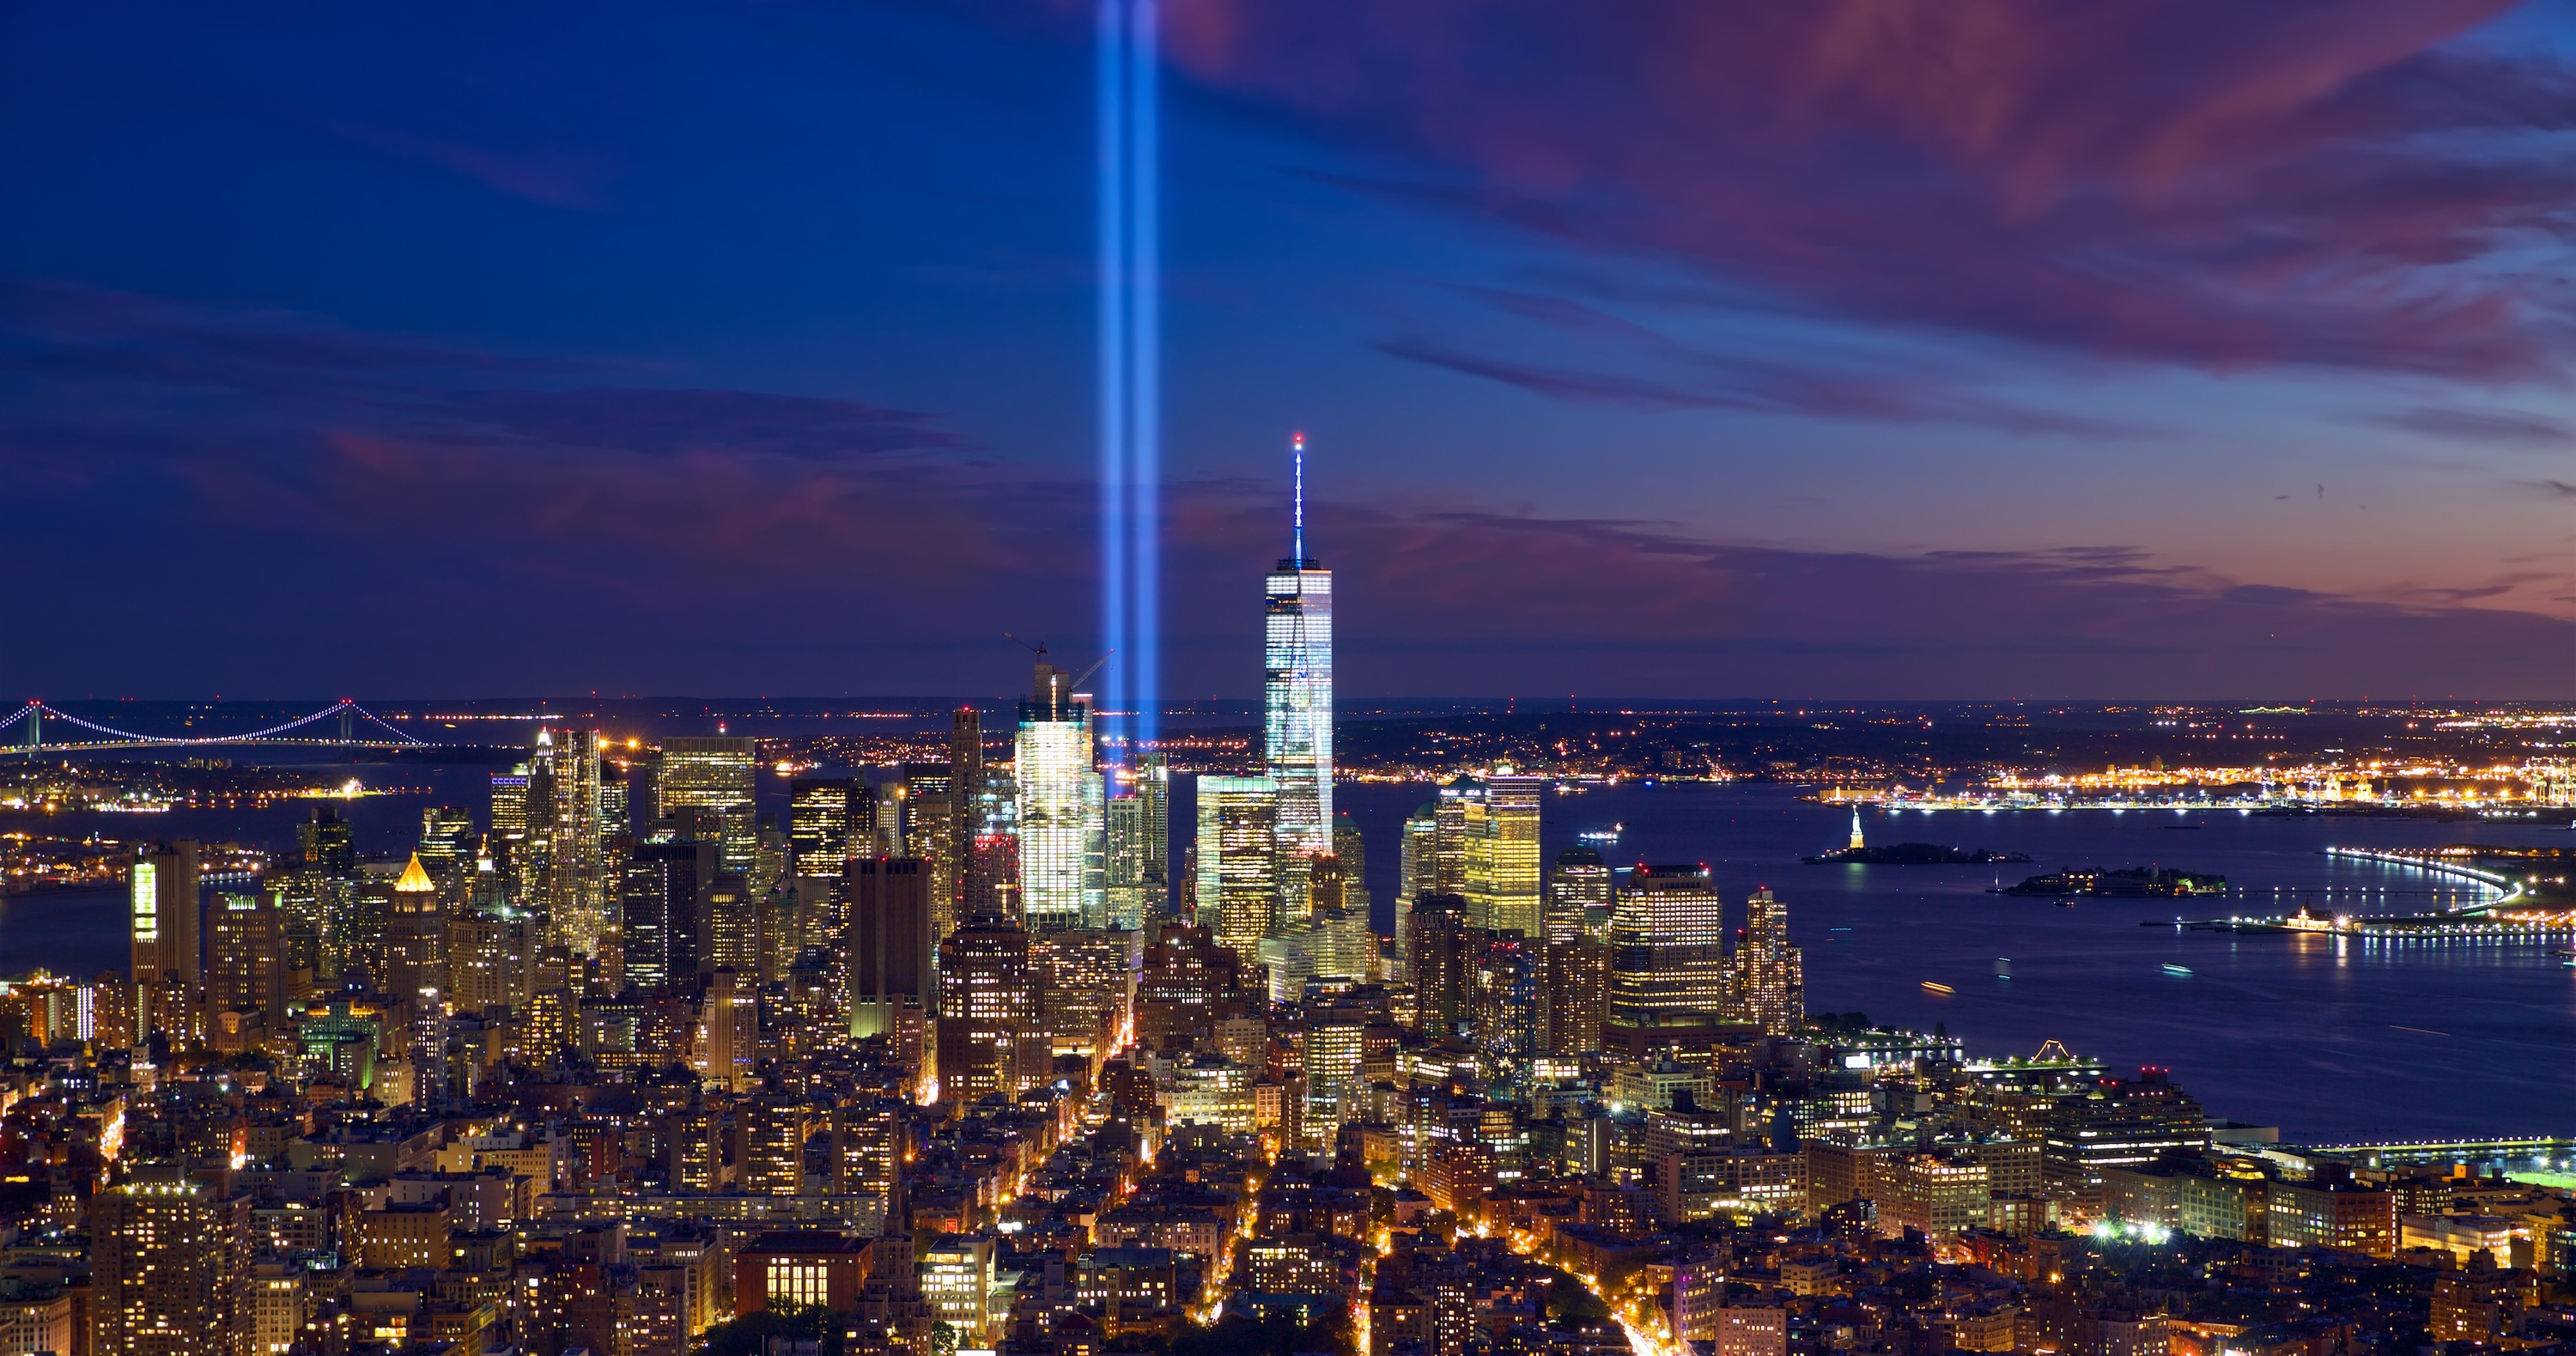 9 11 memorial lights wallpaper